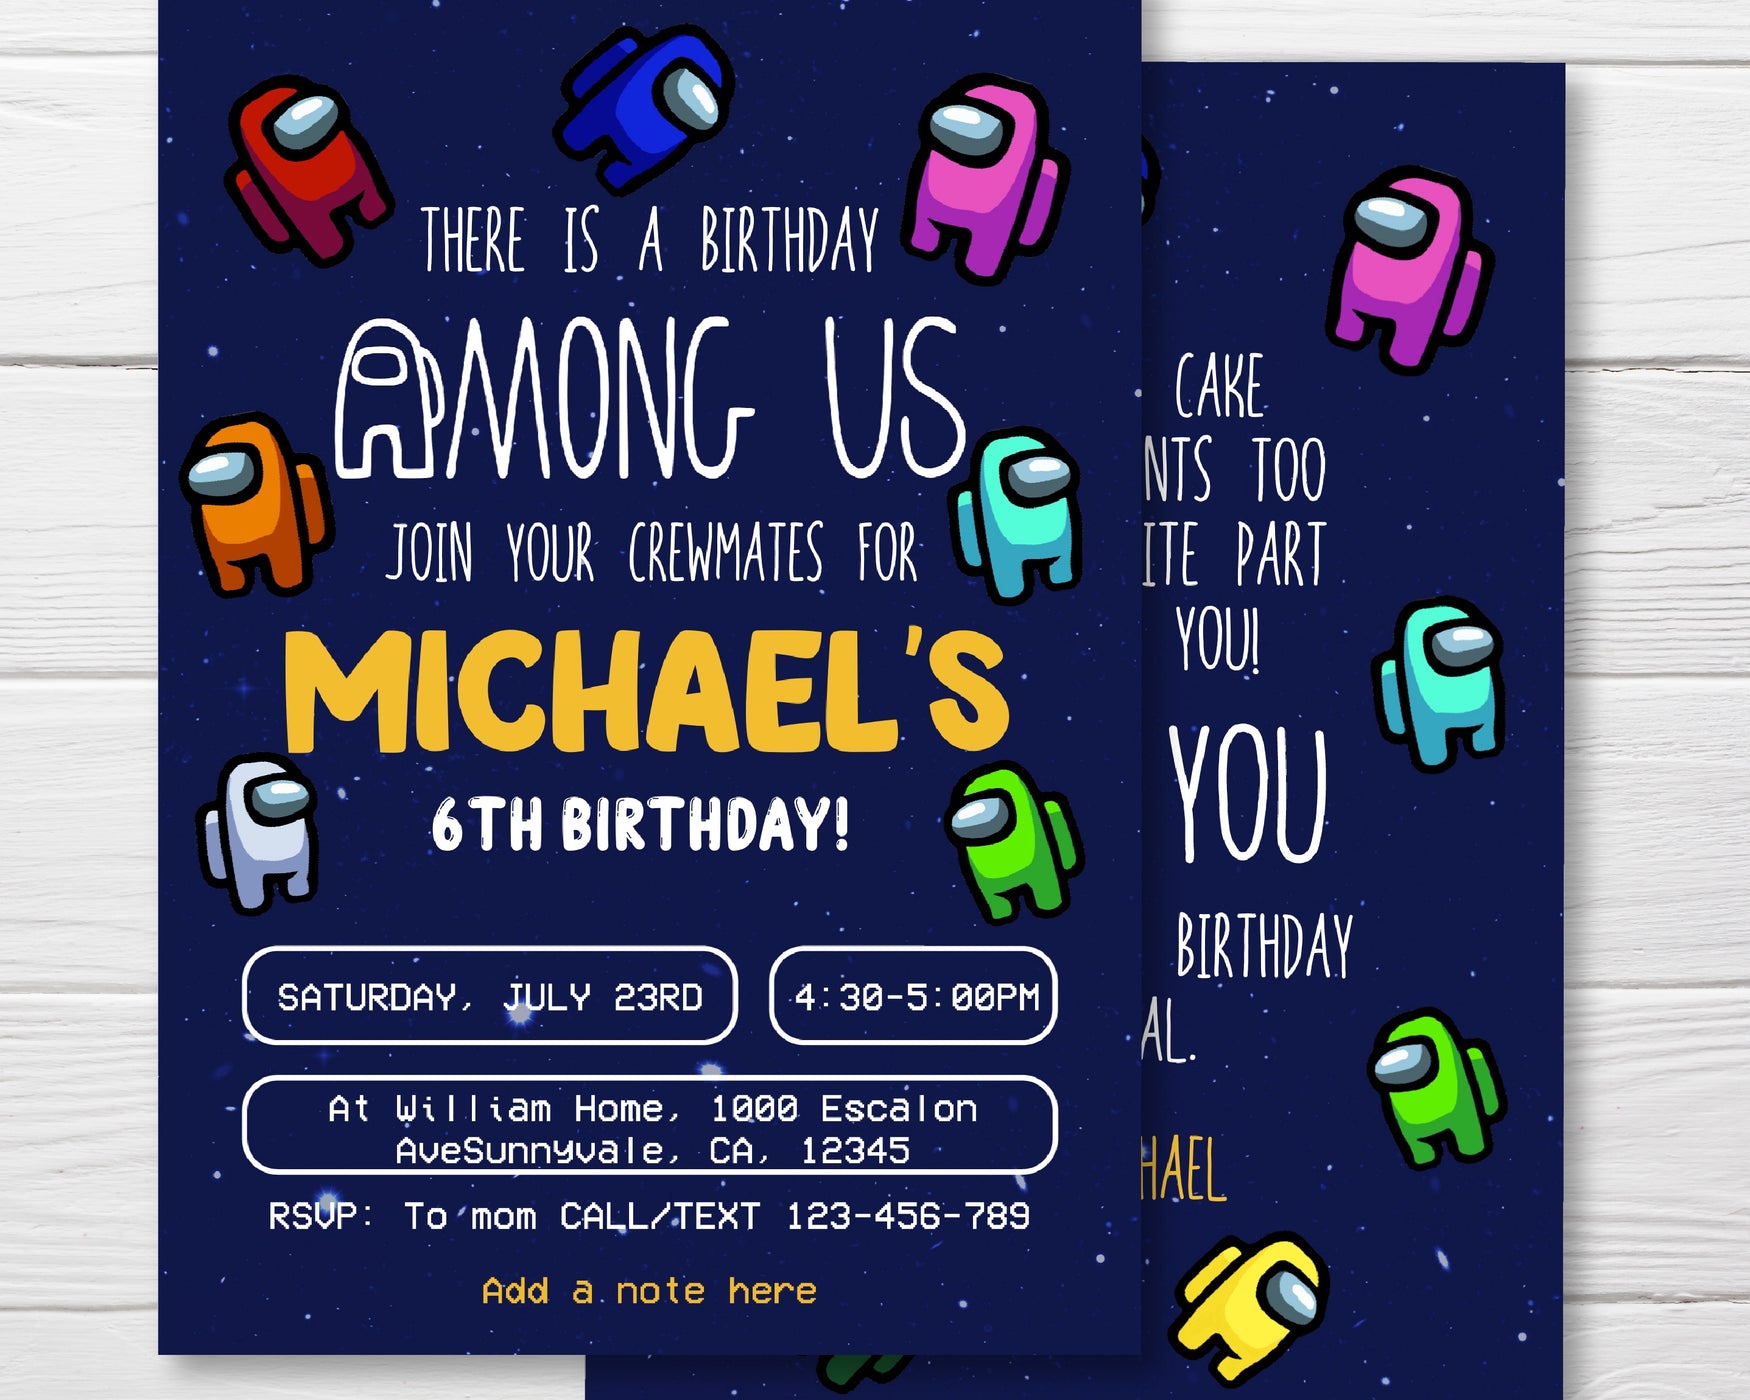 Among Us Birthday Invitation Template | Editable | Printable | Instant Download